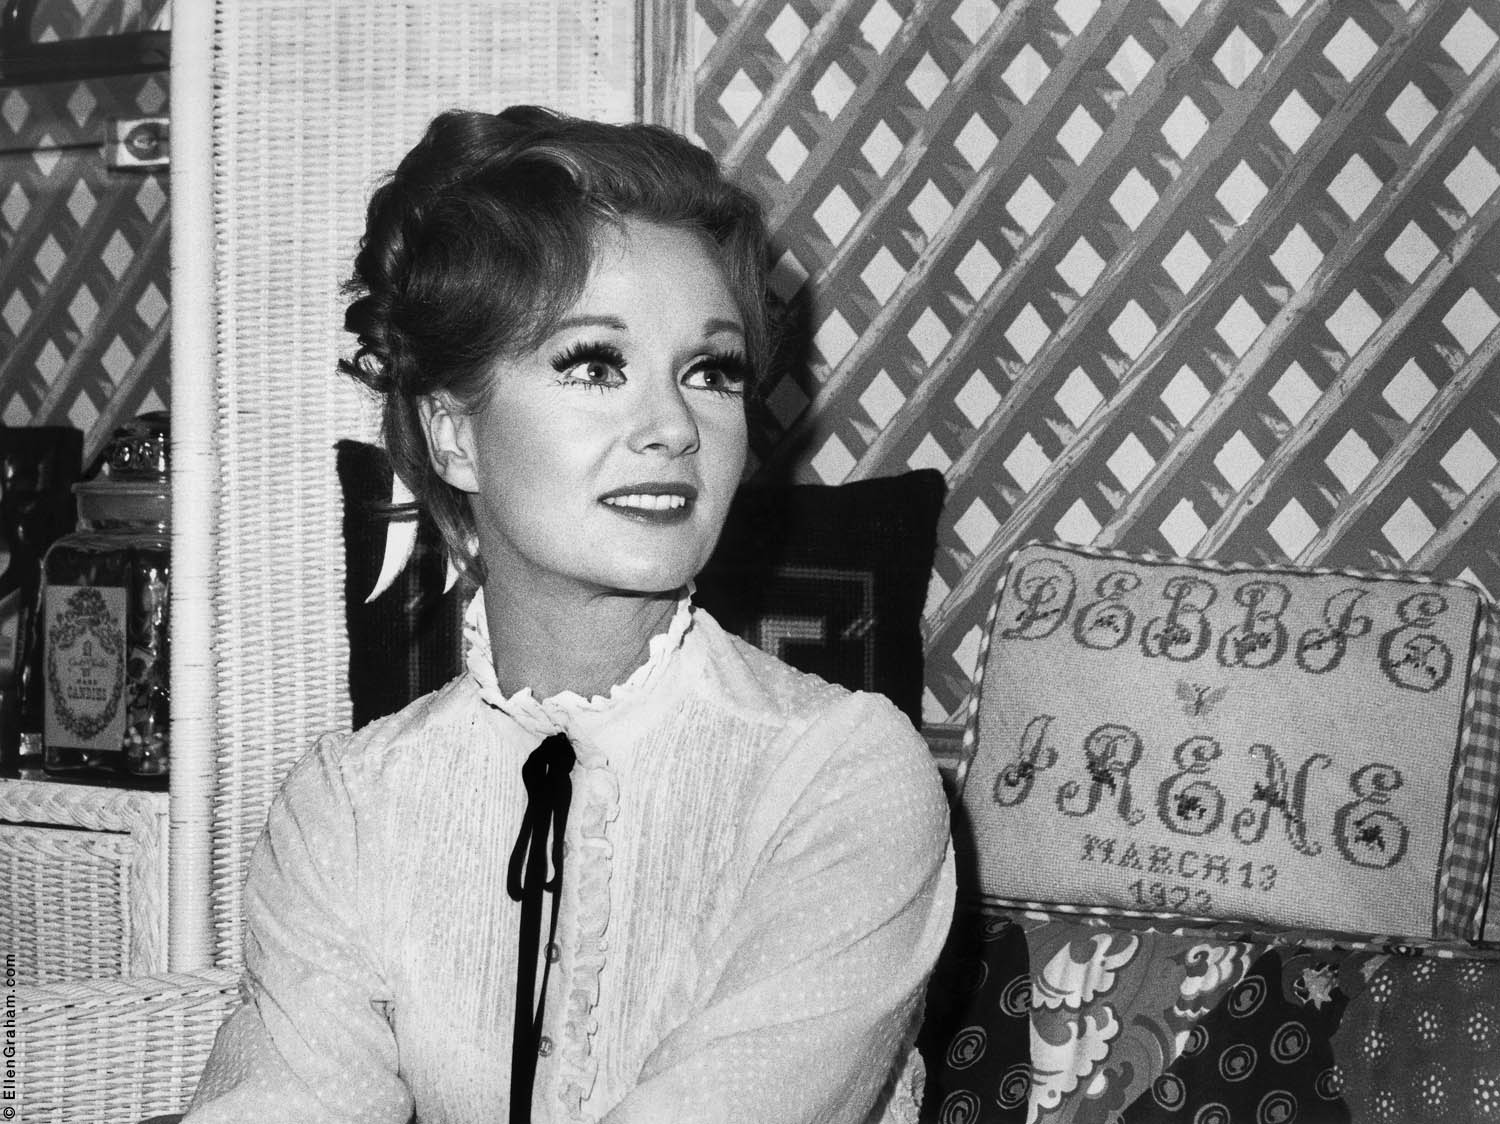 Debbie Reynolds, "Irene" Broadway Musical, New York, NY, 1973